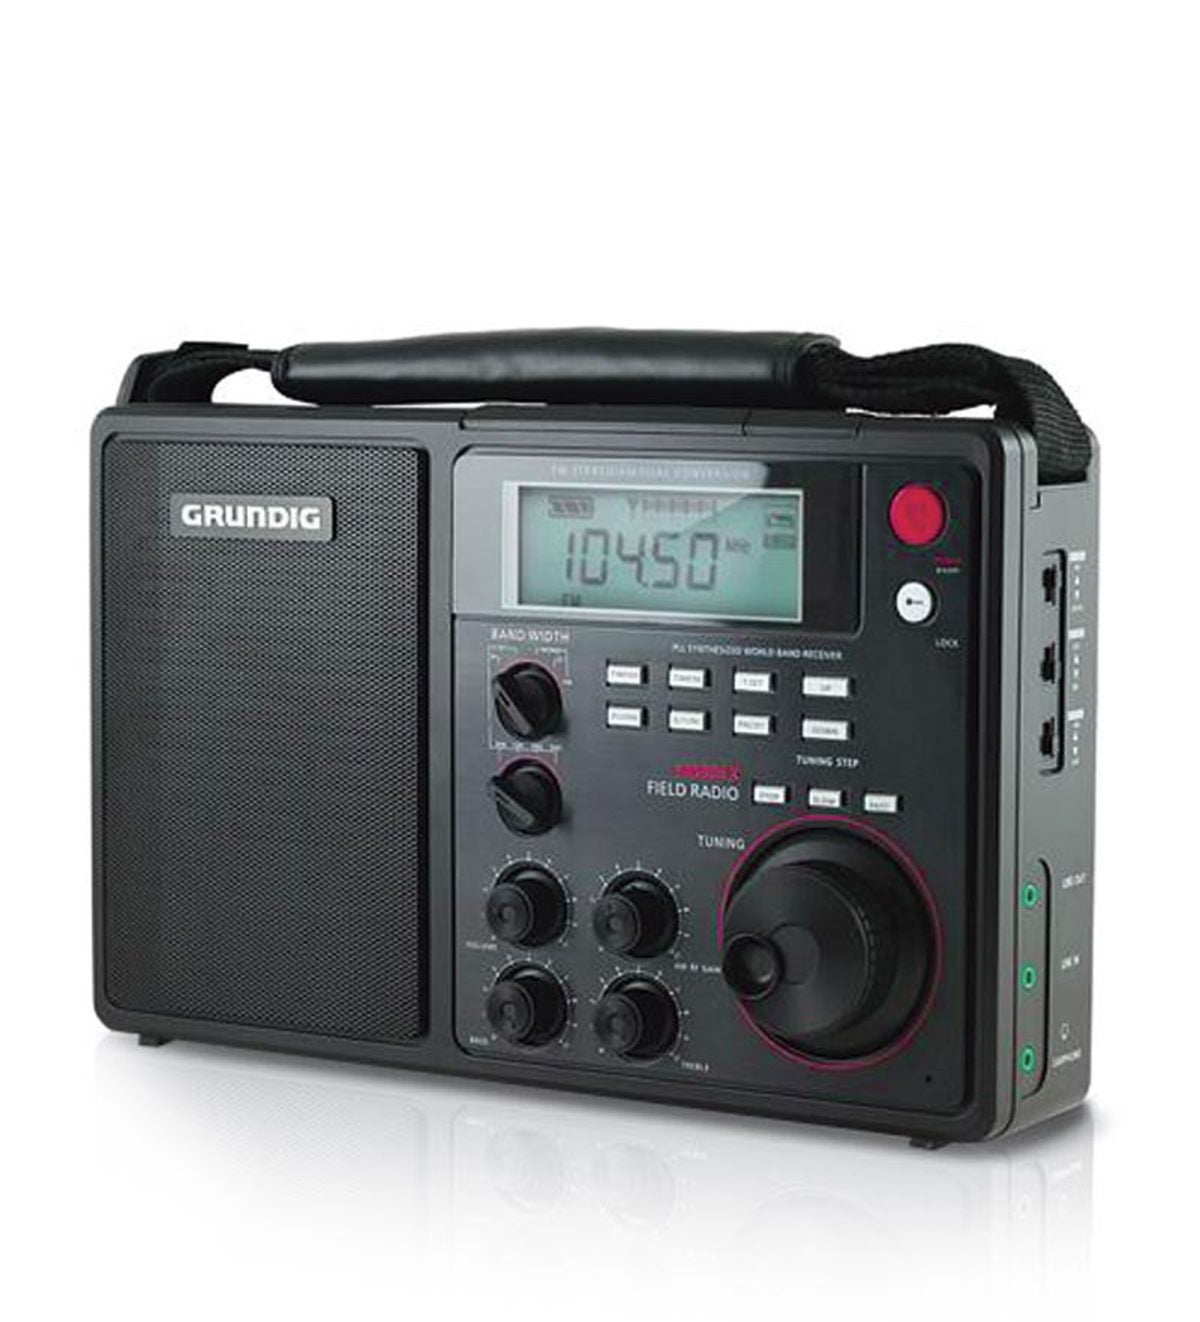 digital shortwave radios